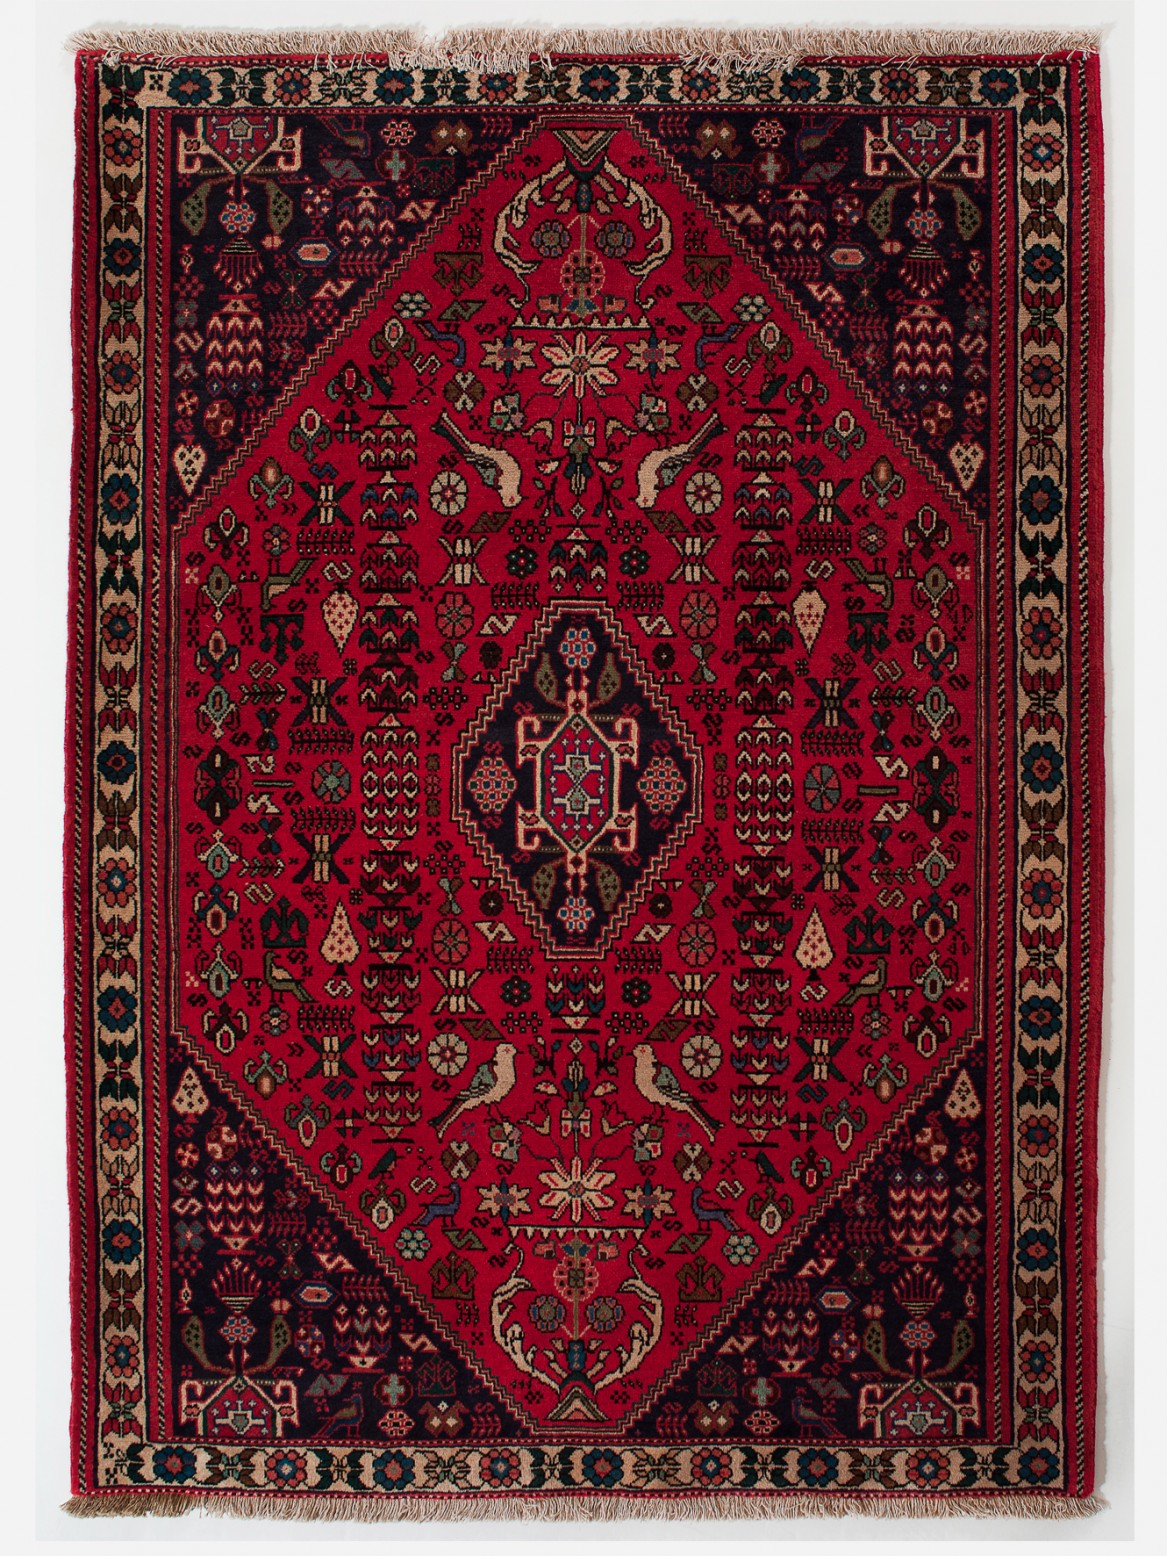 ABADEH IRAN 149 x 106 cm